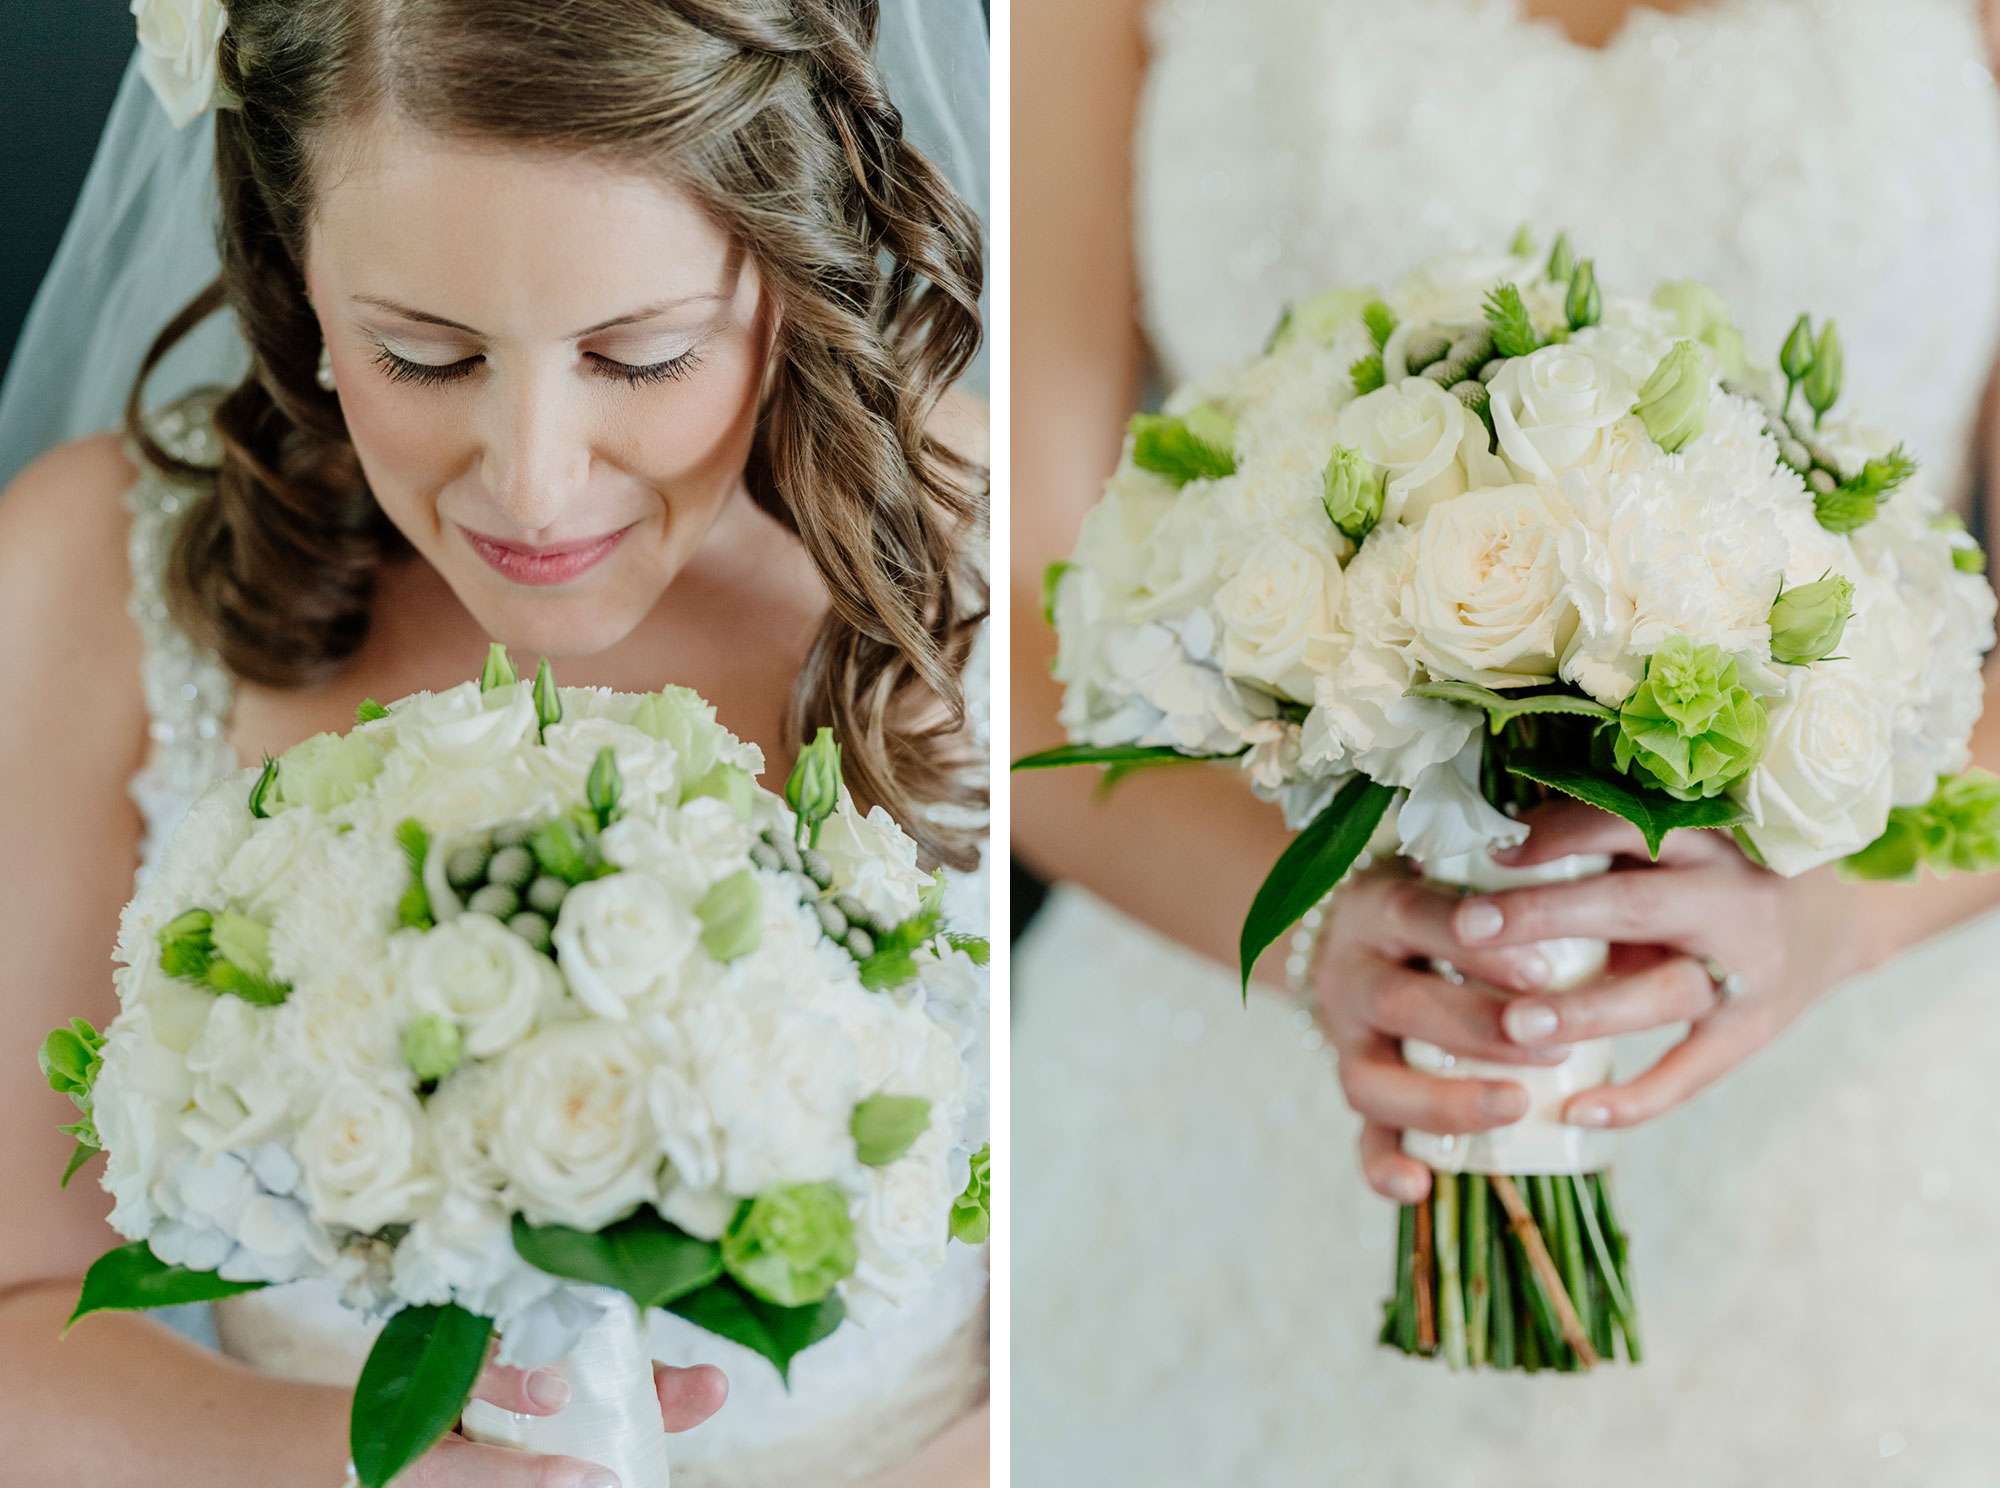 Bride admiring her floral bouquet